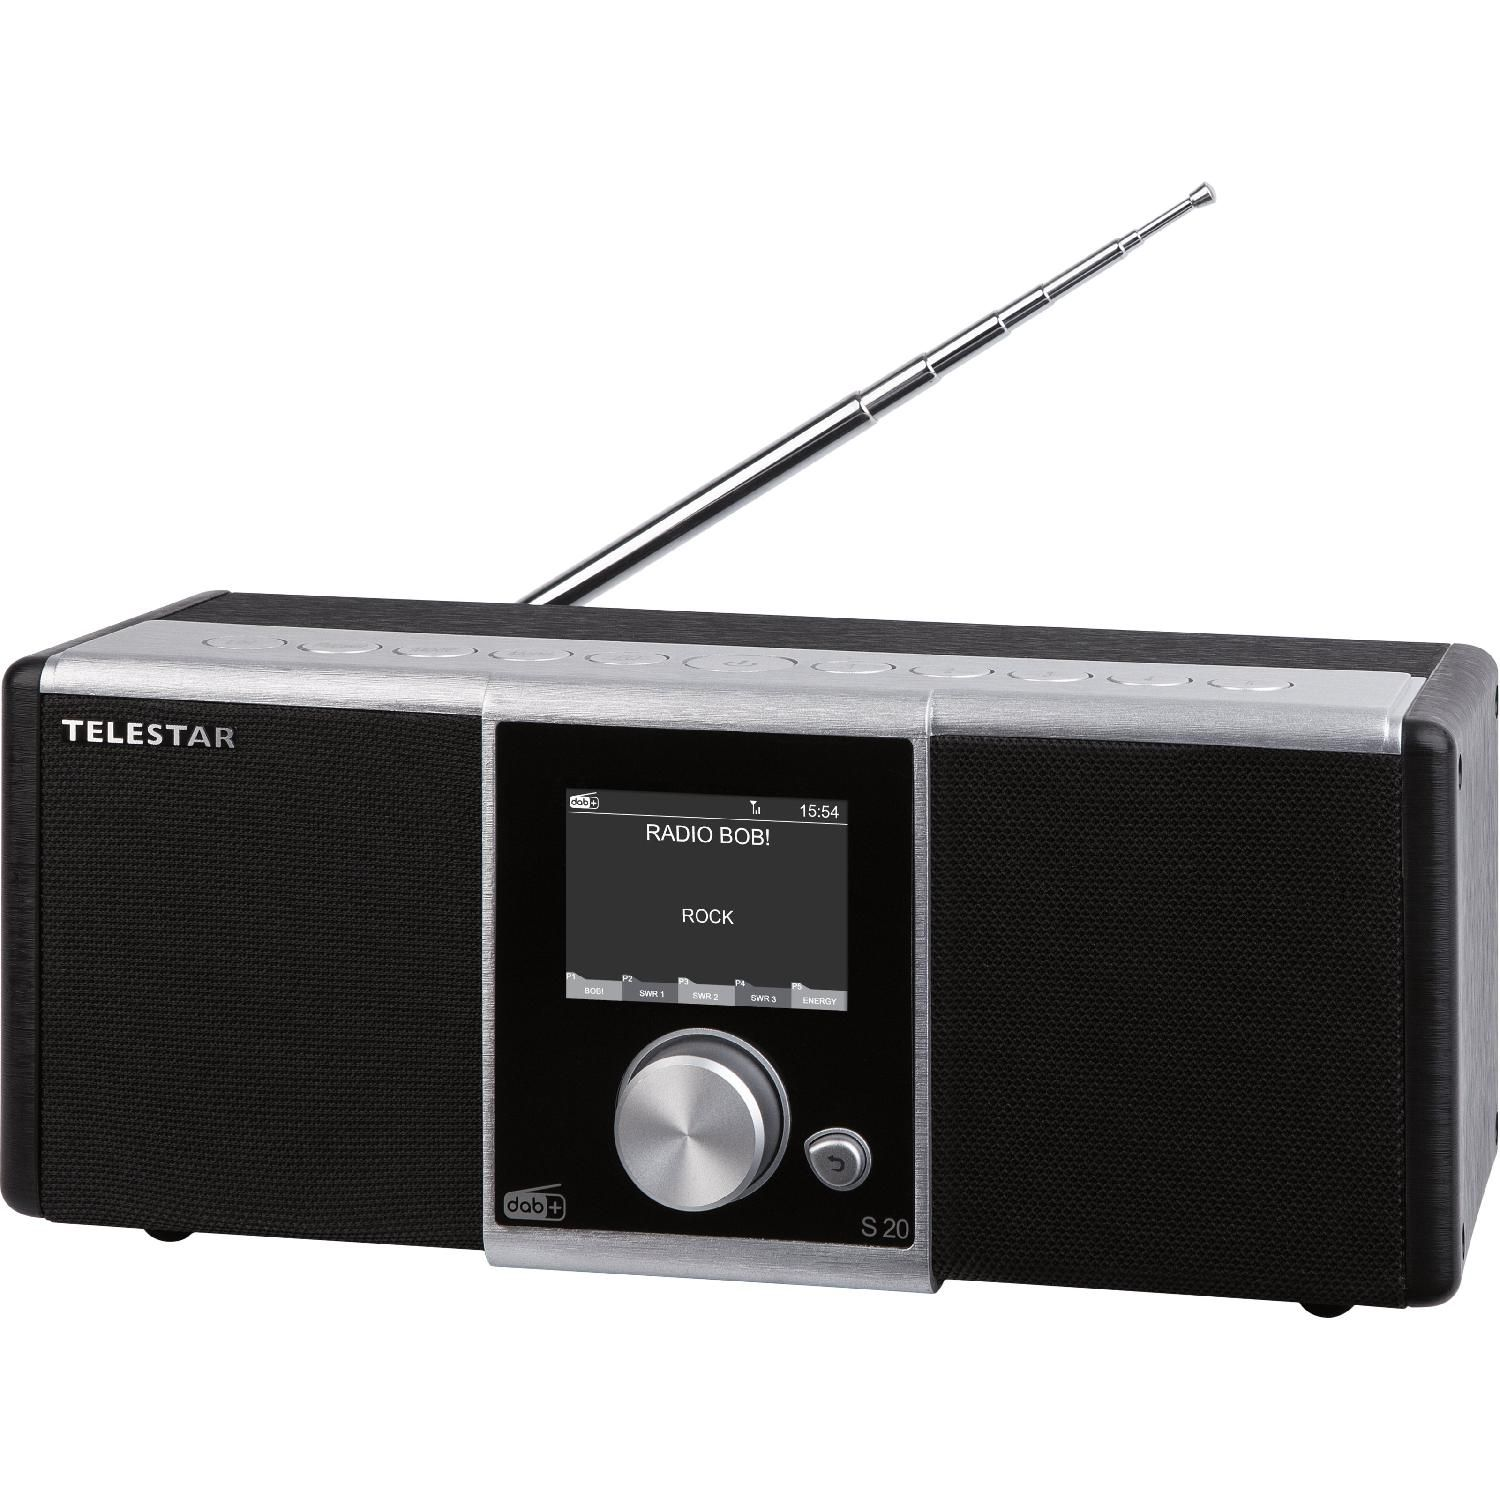 TELESTAR S 20 DAB+ Radio, DAB, AM, FM, DAB, schwarz DAB+, UKW